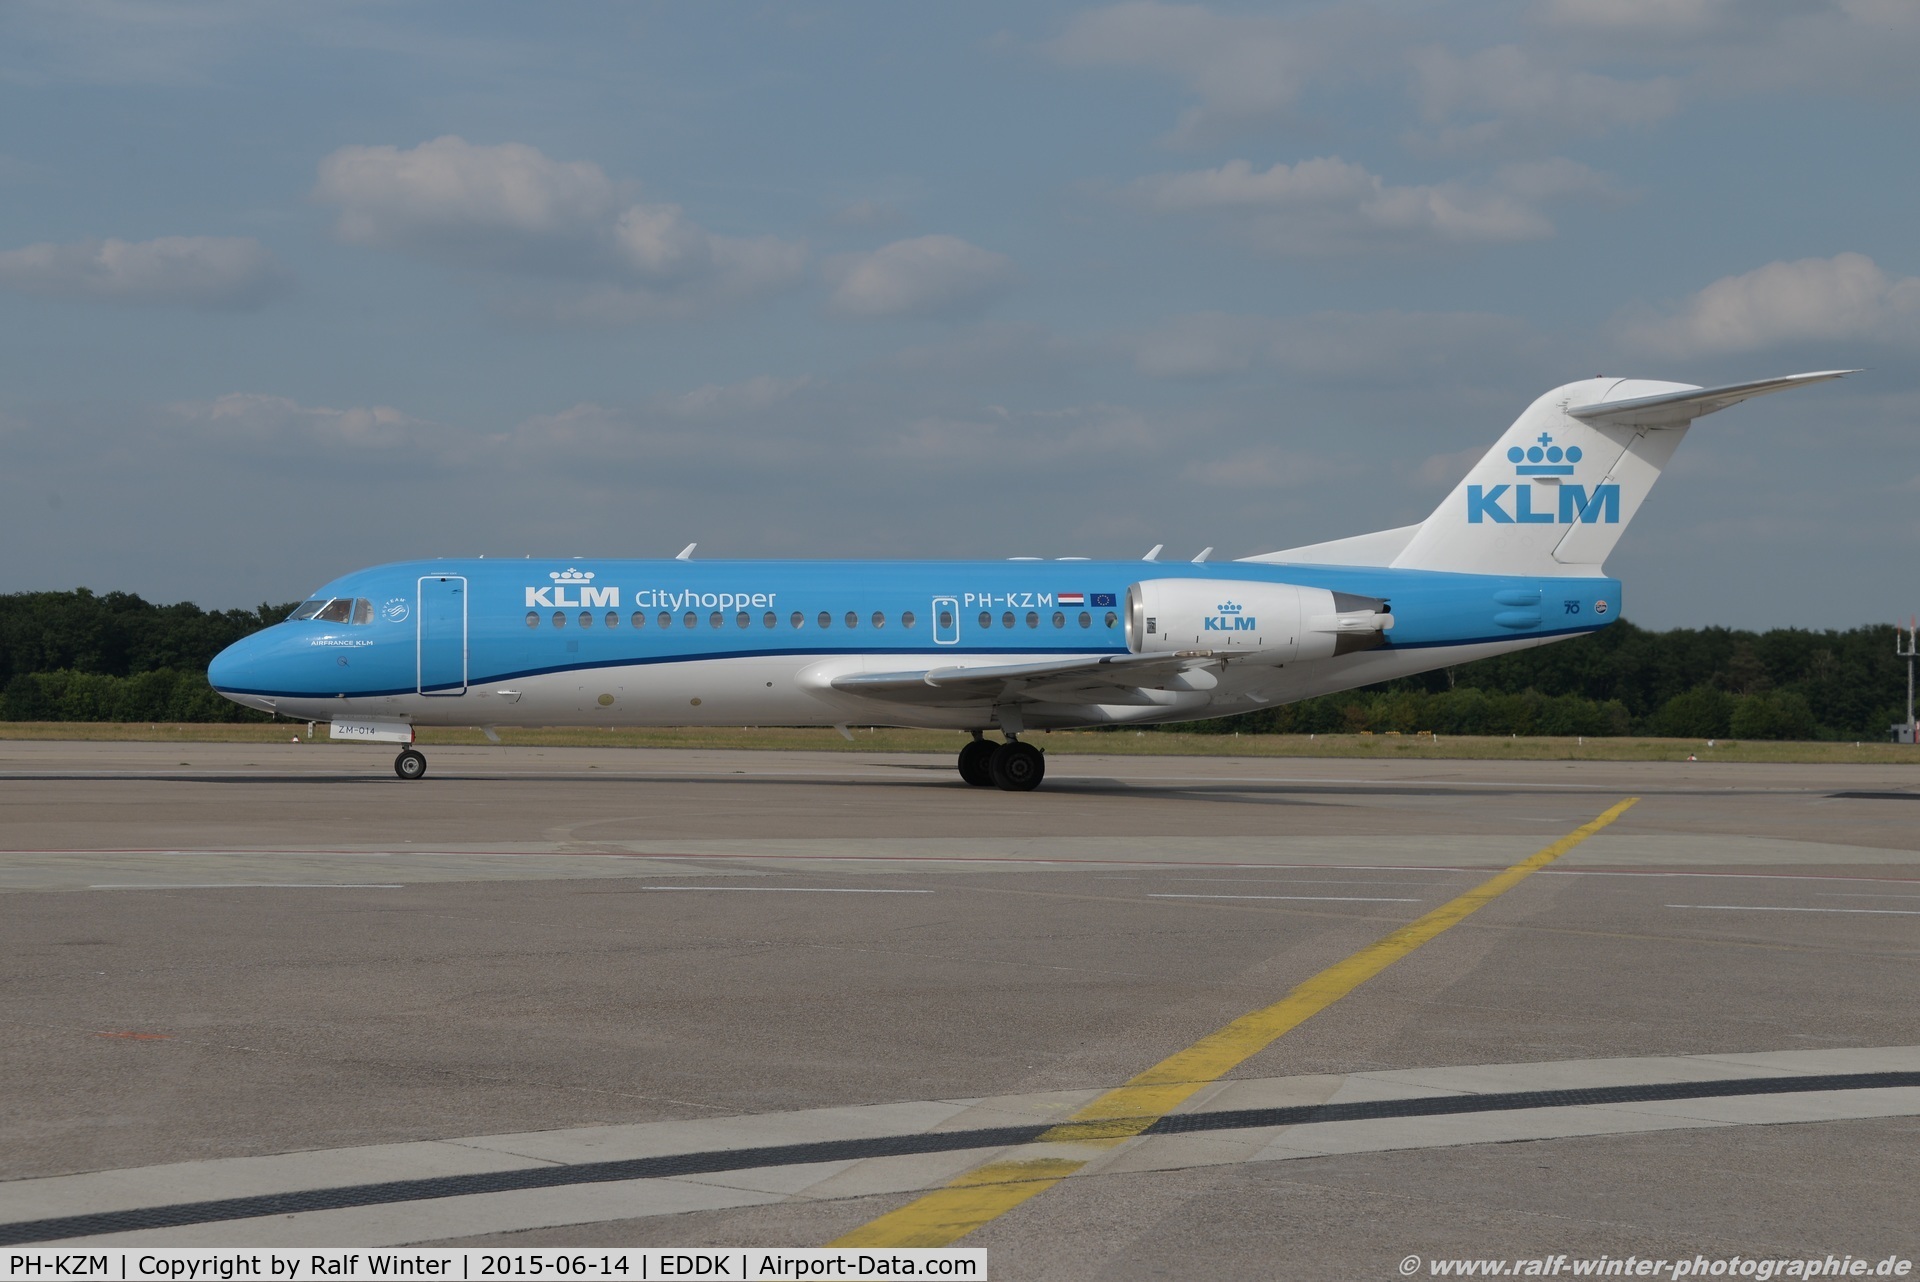 PH-KZM, 1995 Fokker 70 (F-28-0070) C/N 11561, Fokker F70 F28-0070 - WA KLC KLM CityHopper - 11561 - PH-KZM - 14.06.2015 - CGN